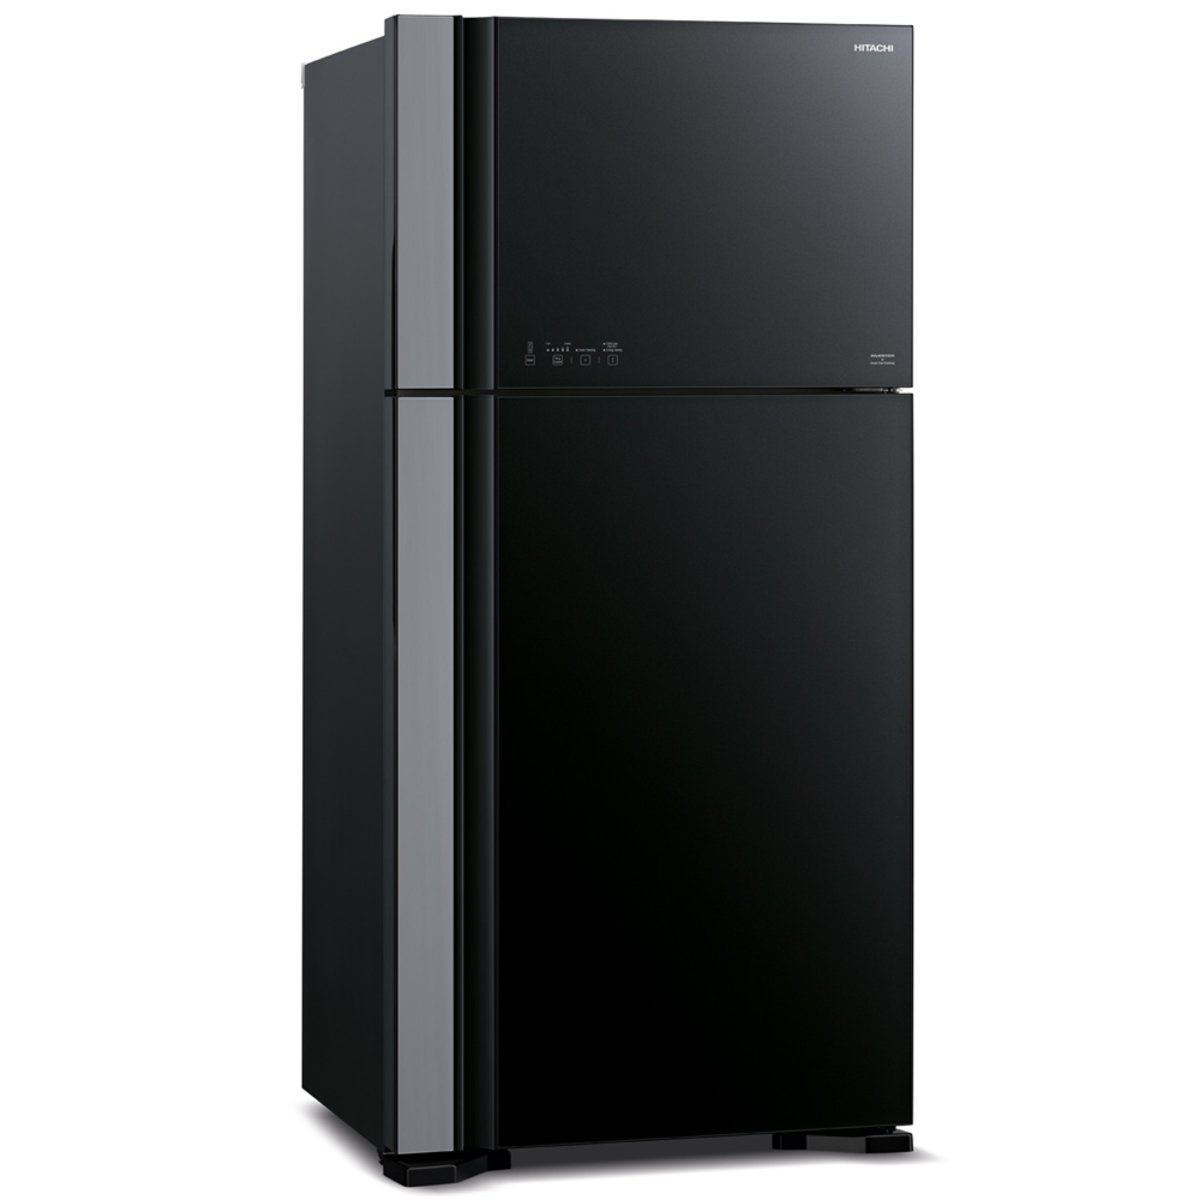 Hitachi Double Door Refrigerator RVG610PUK3GBK 610 Ltr